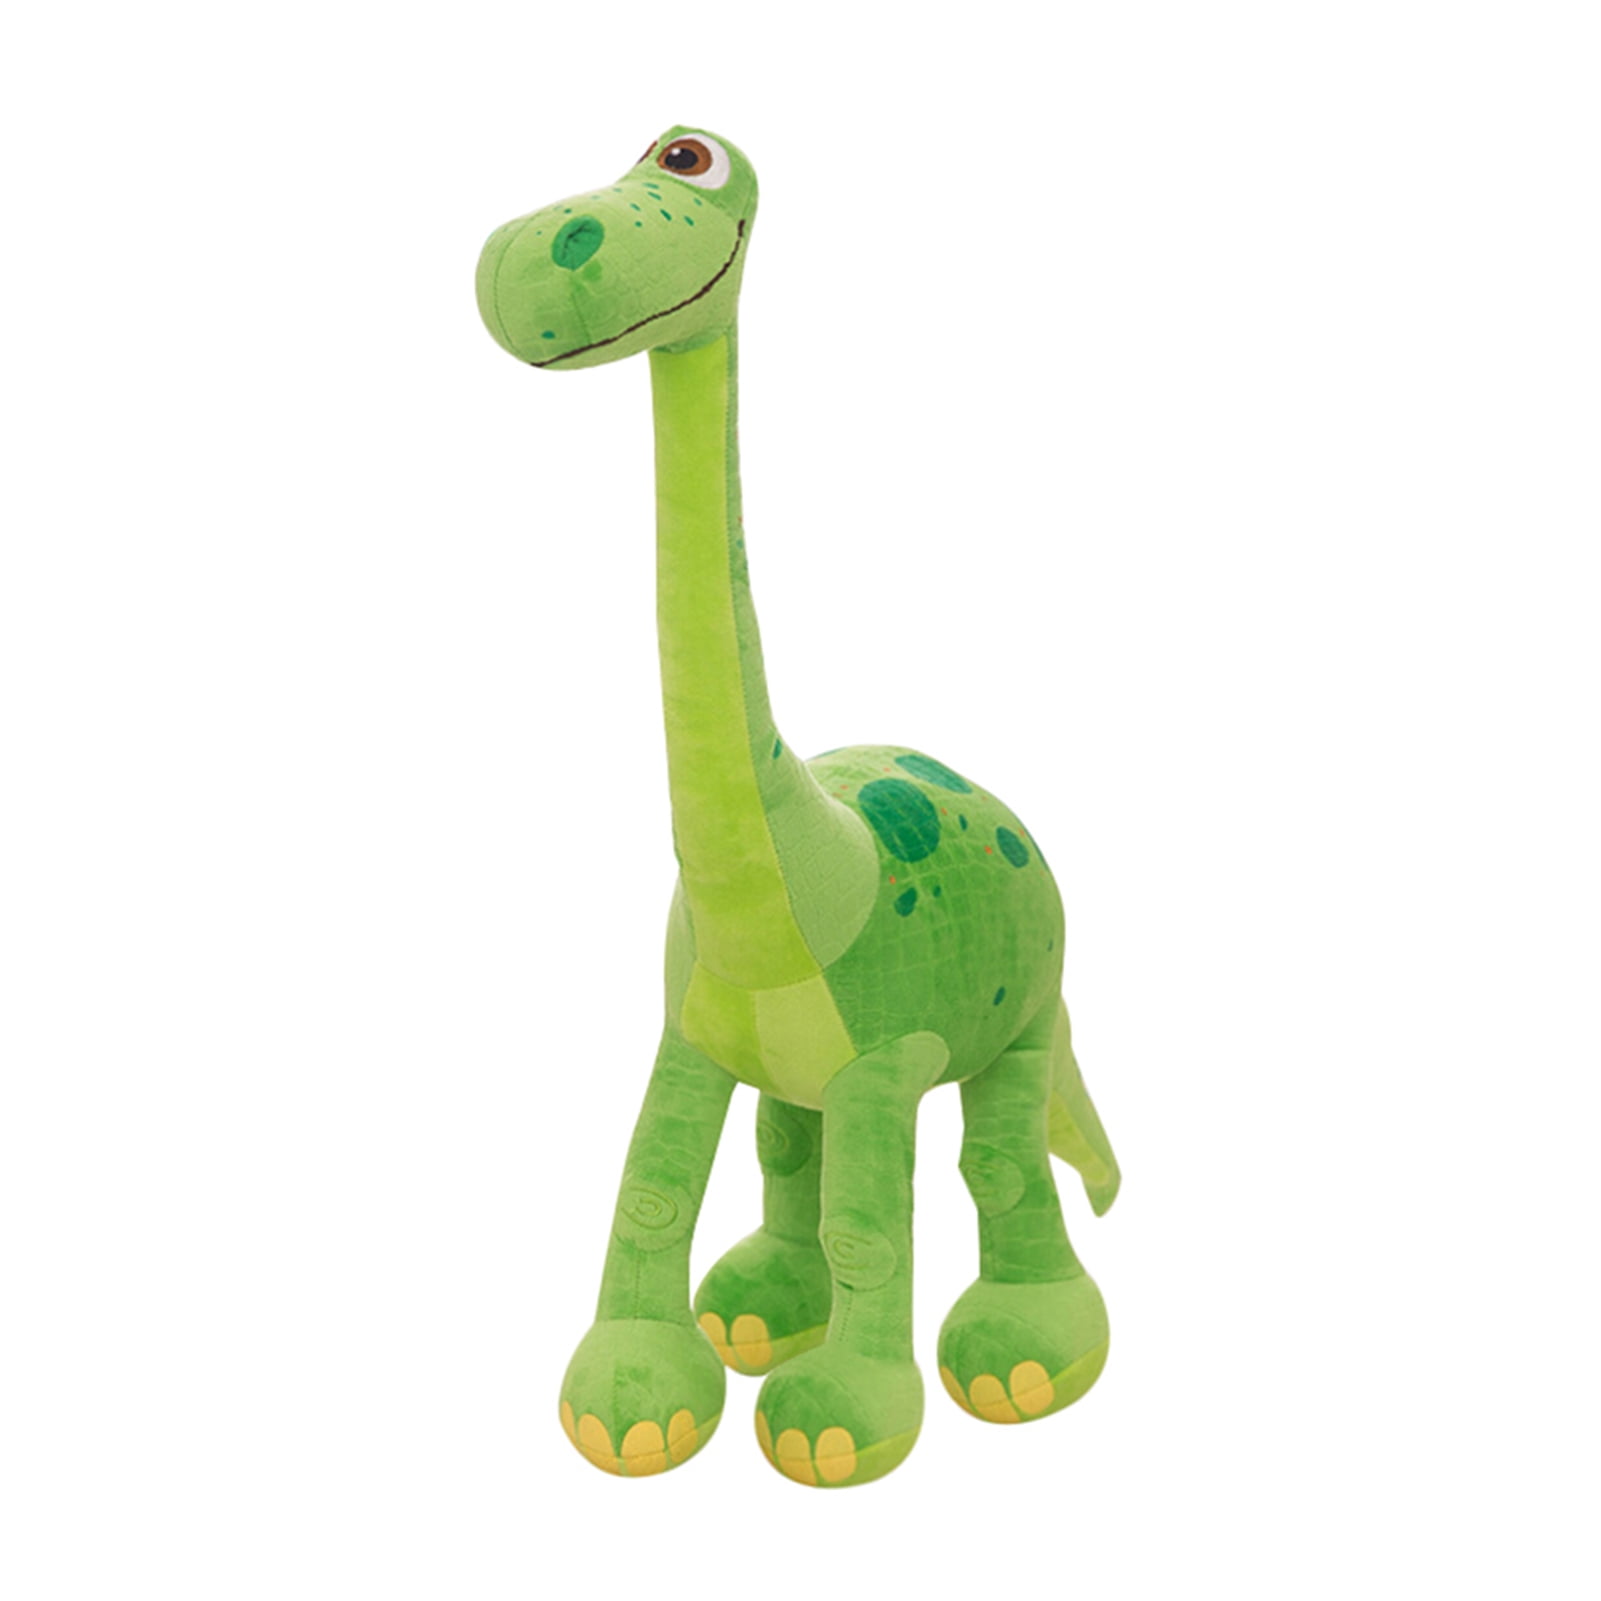 12" The Good Dinosaur Plush Toy Arlo Green Dinosaur Soft Toy Doll Kids Toy 